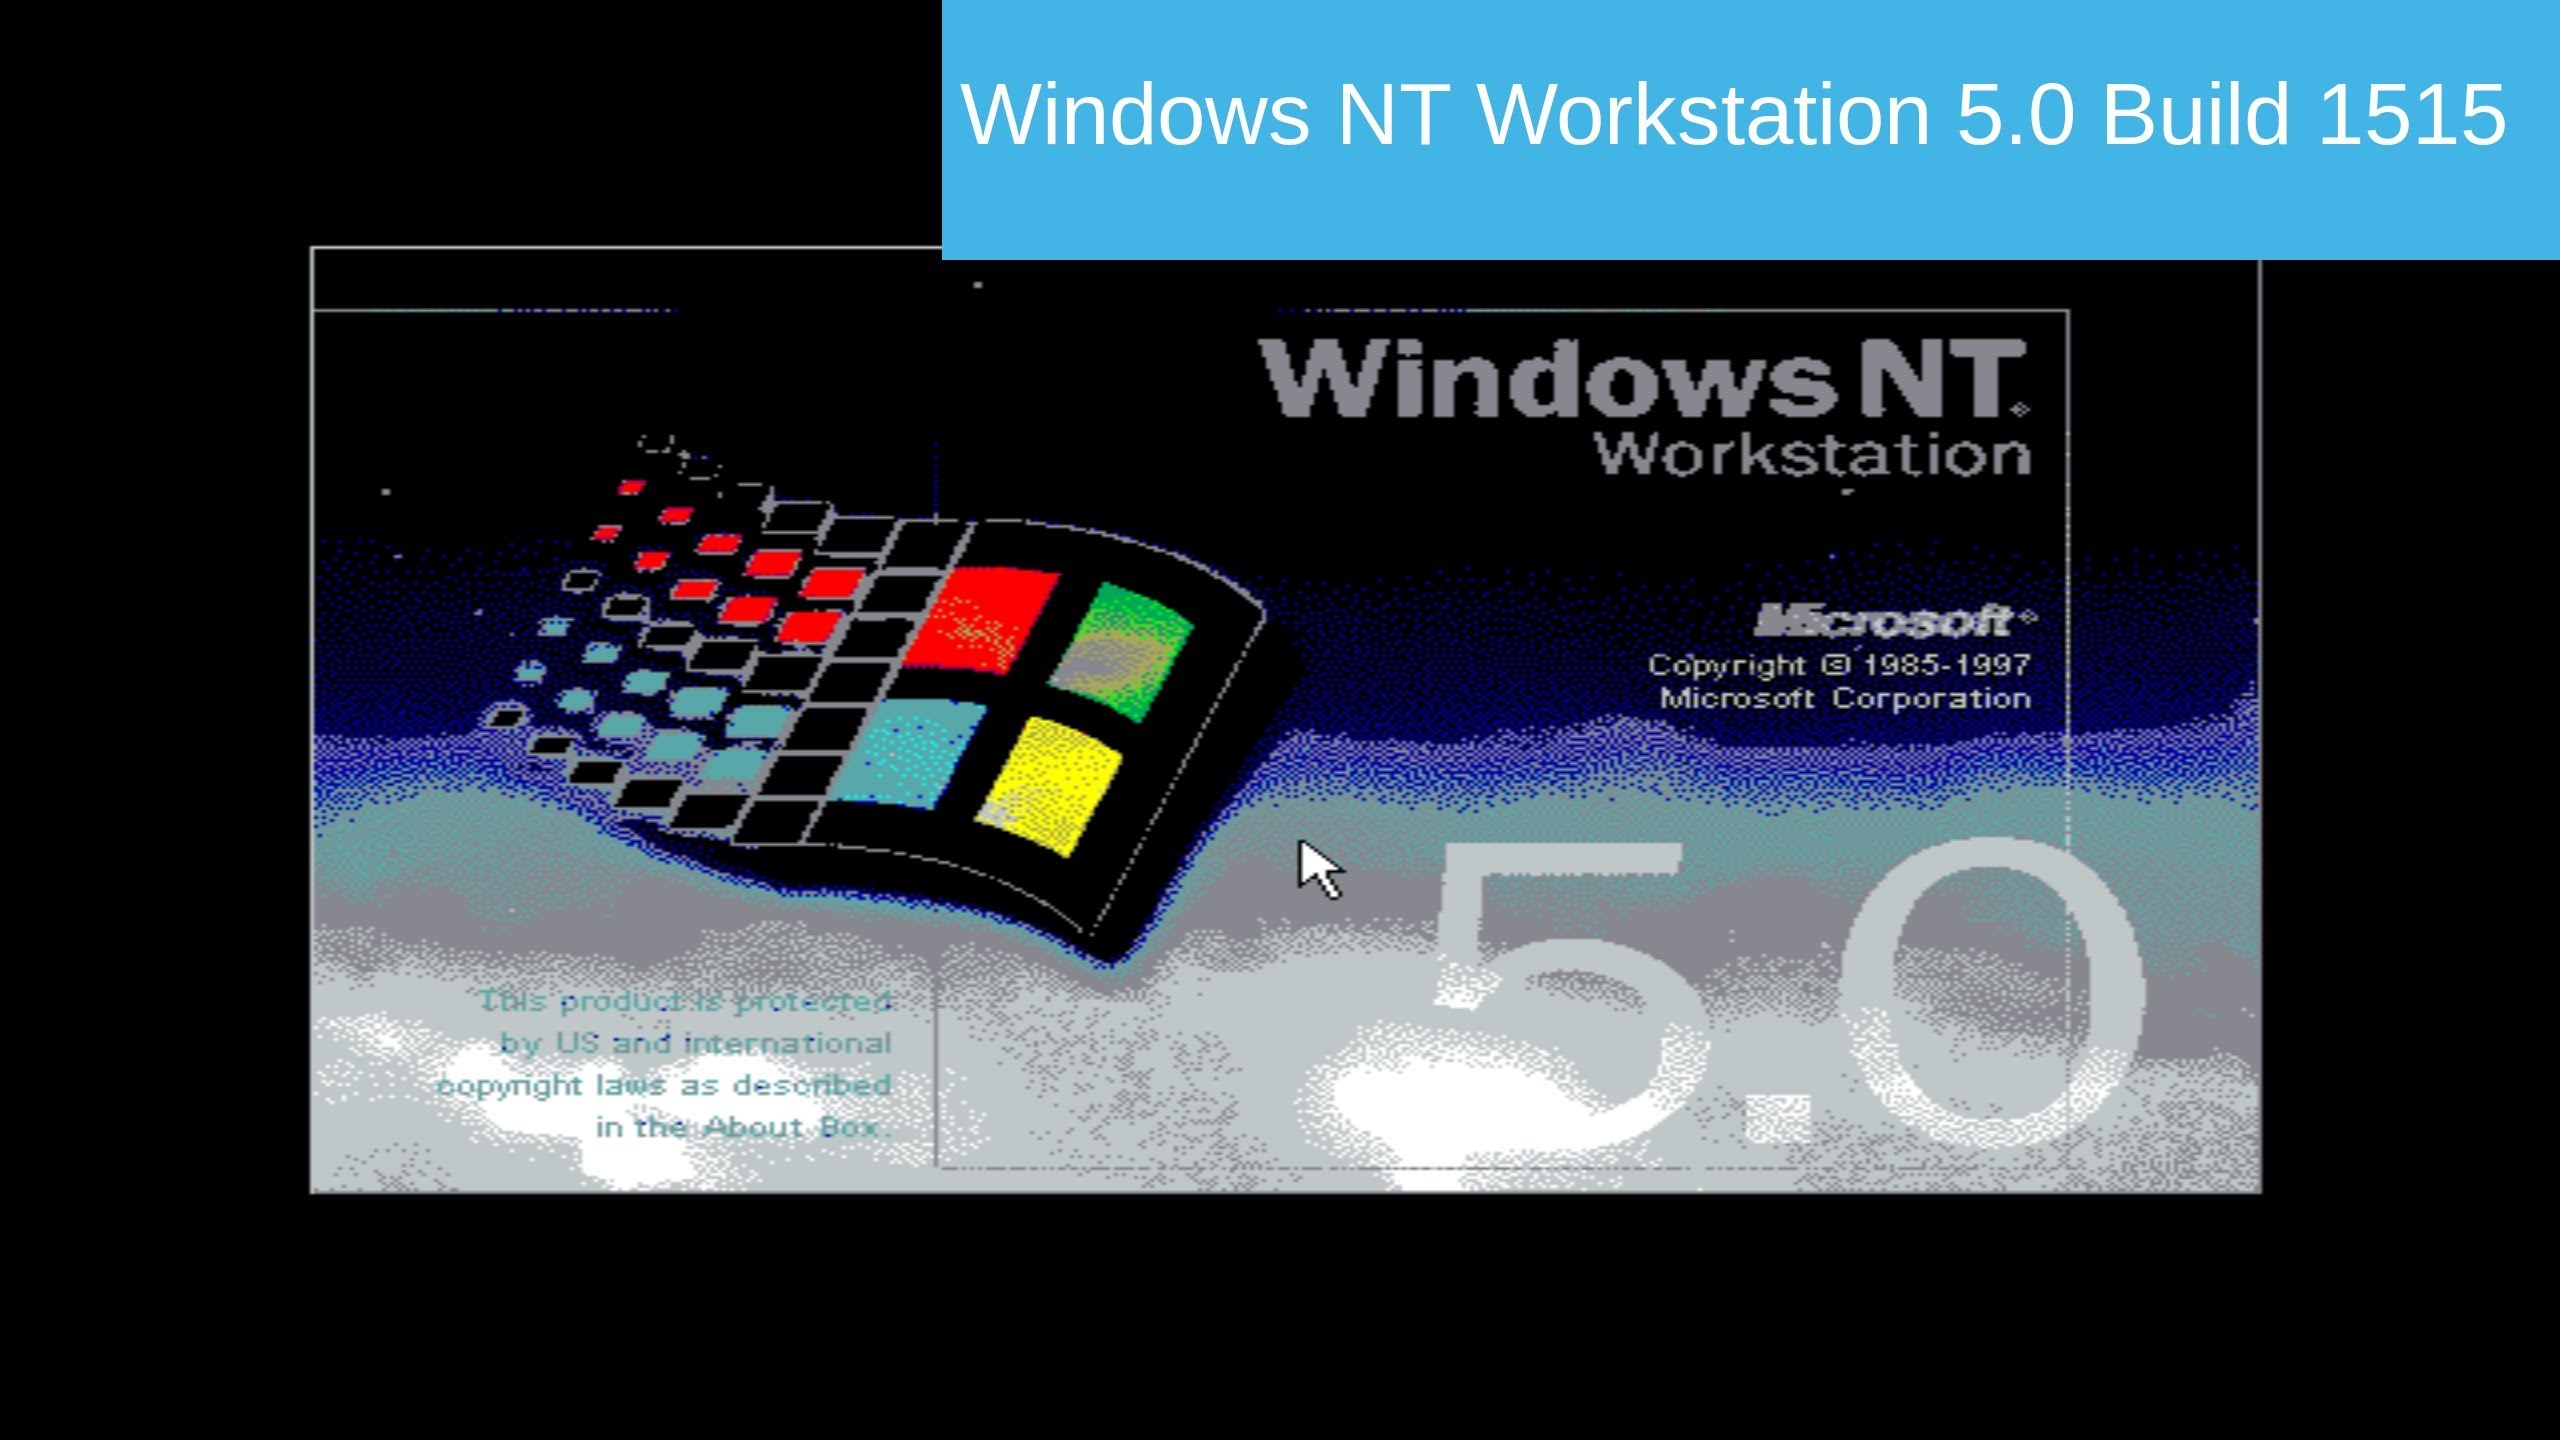 Windows NT Workstation 5.0 Beta 2